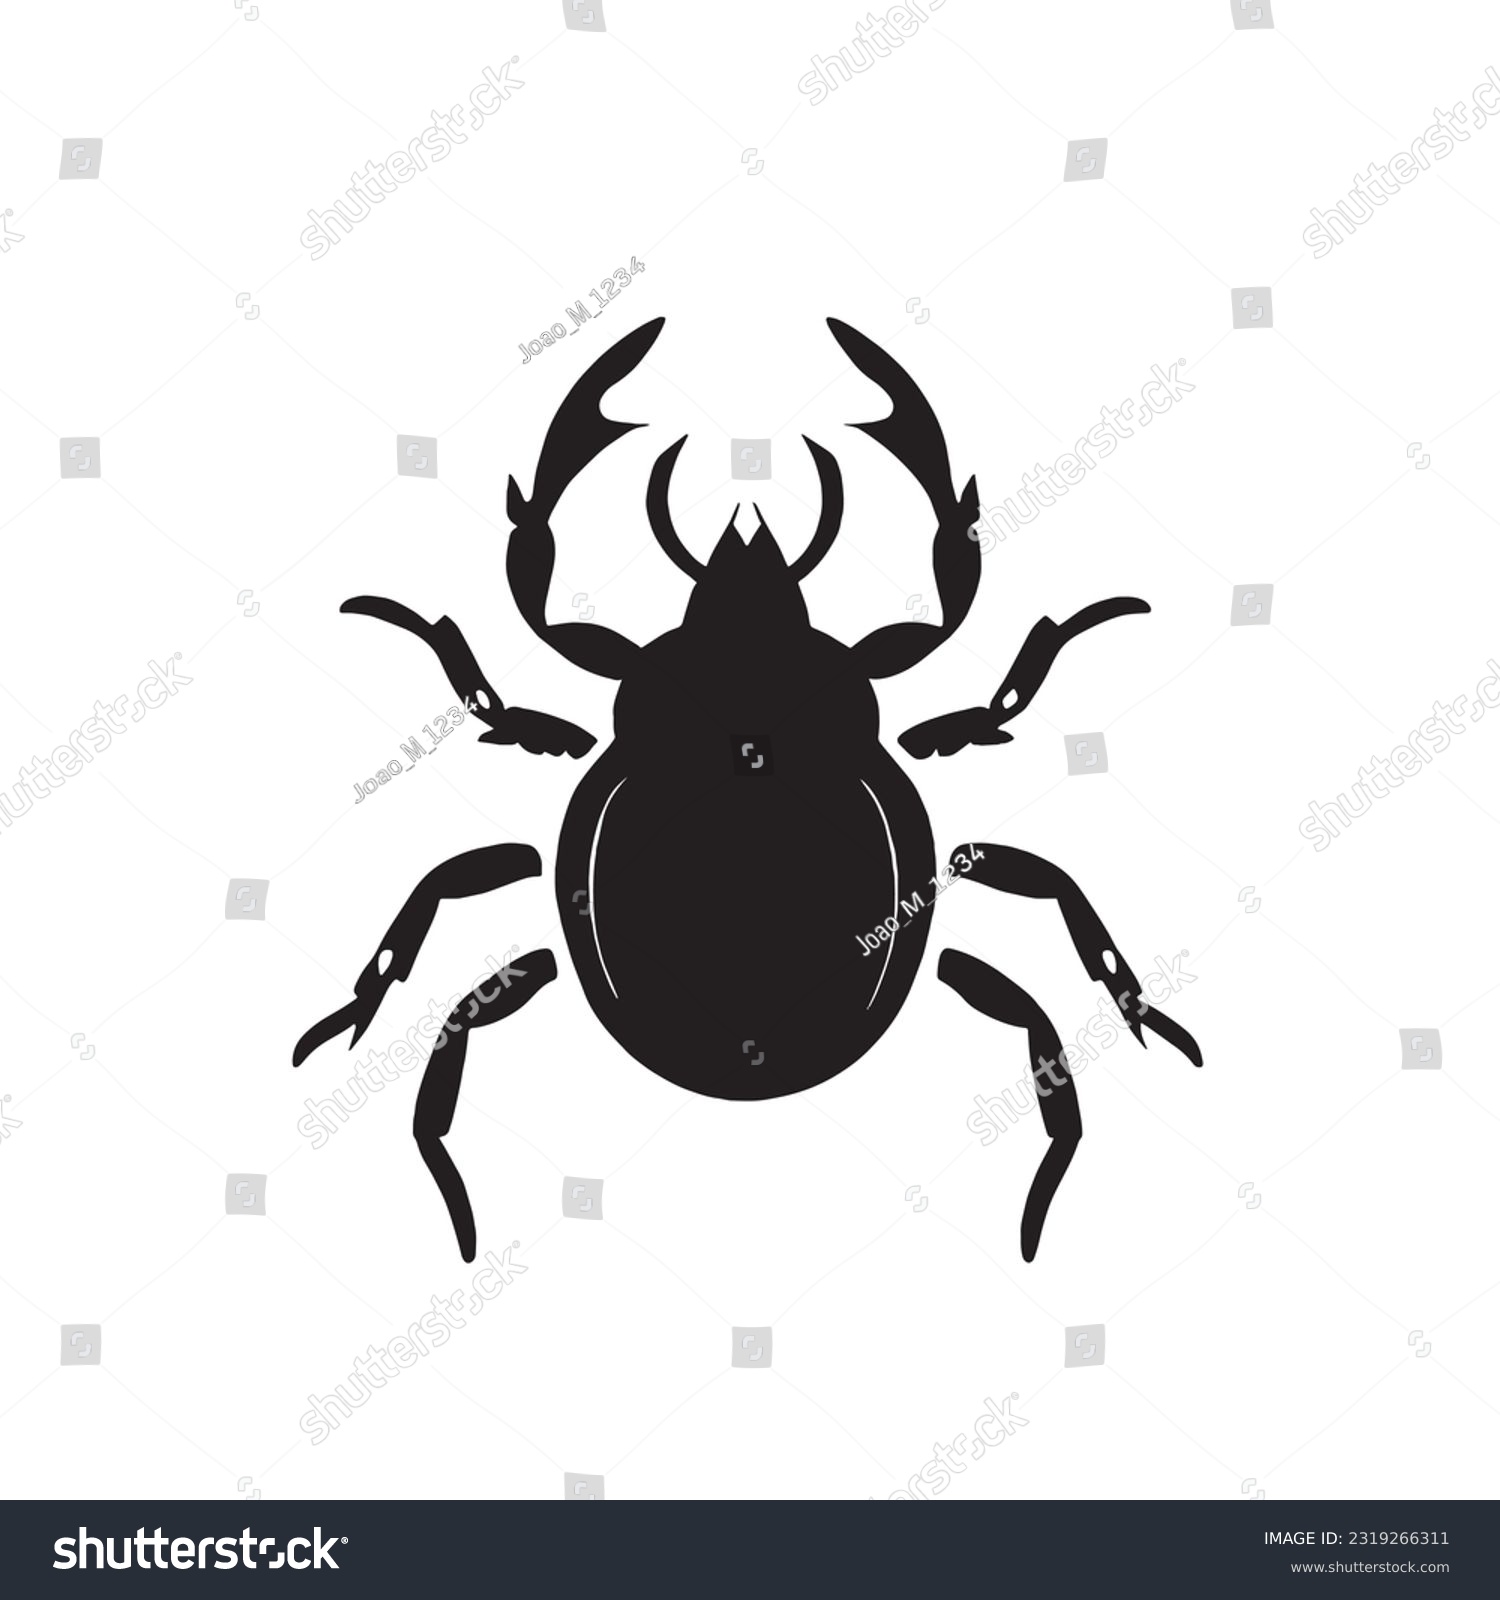 SVG of beetle icon in black color svg